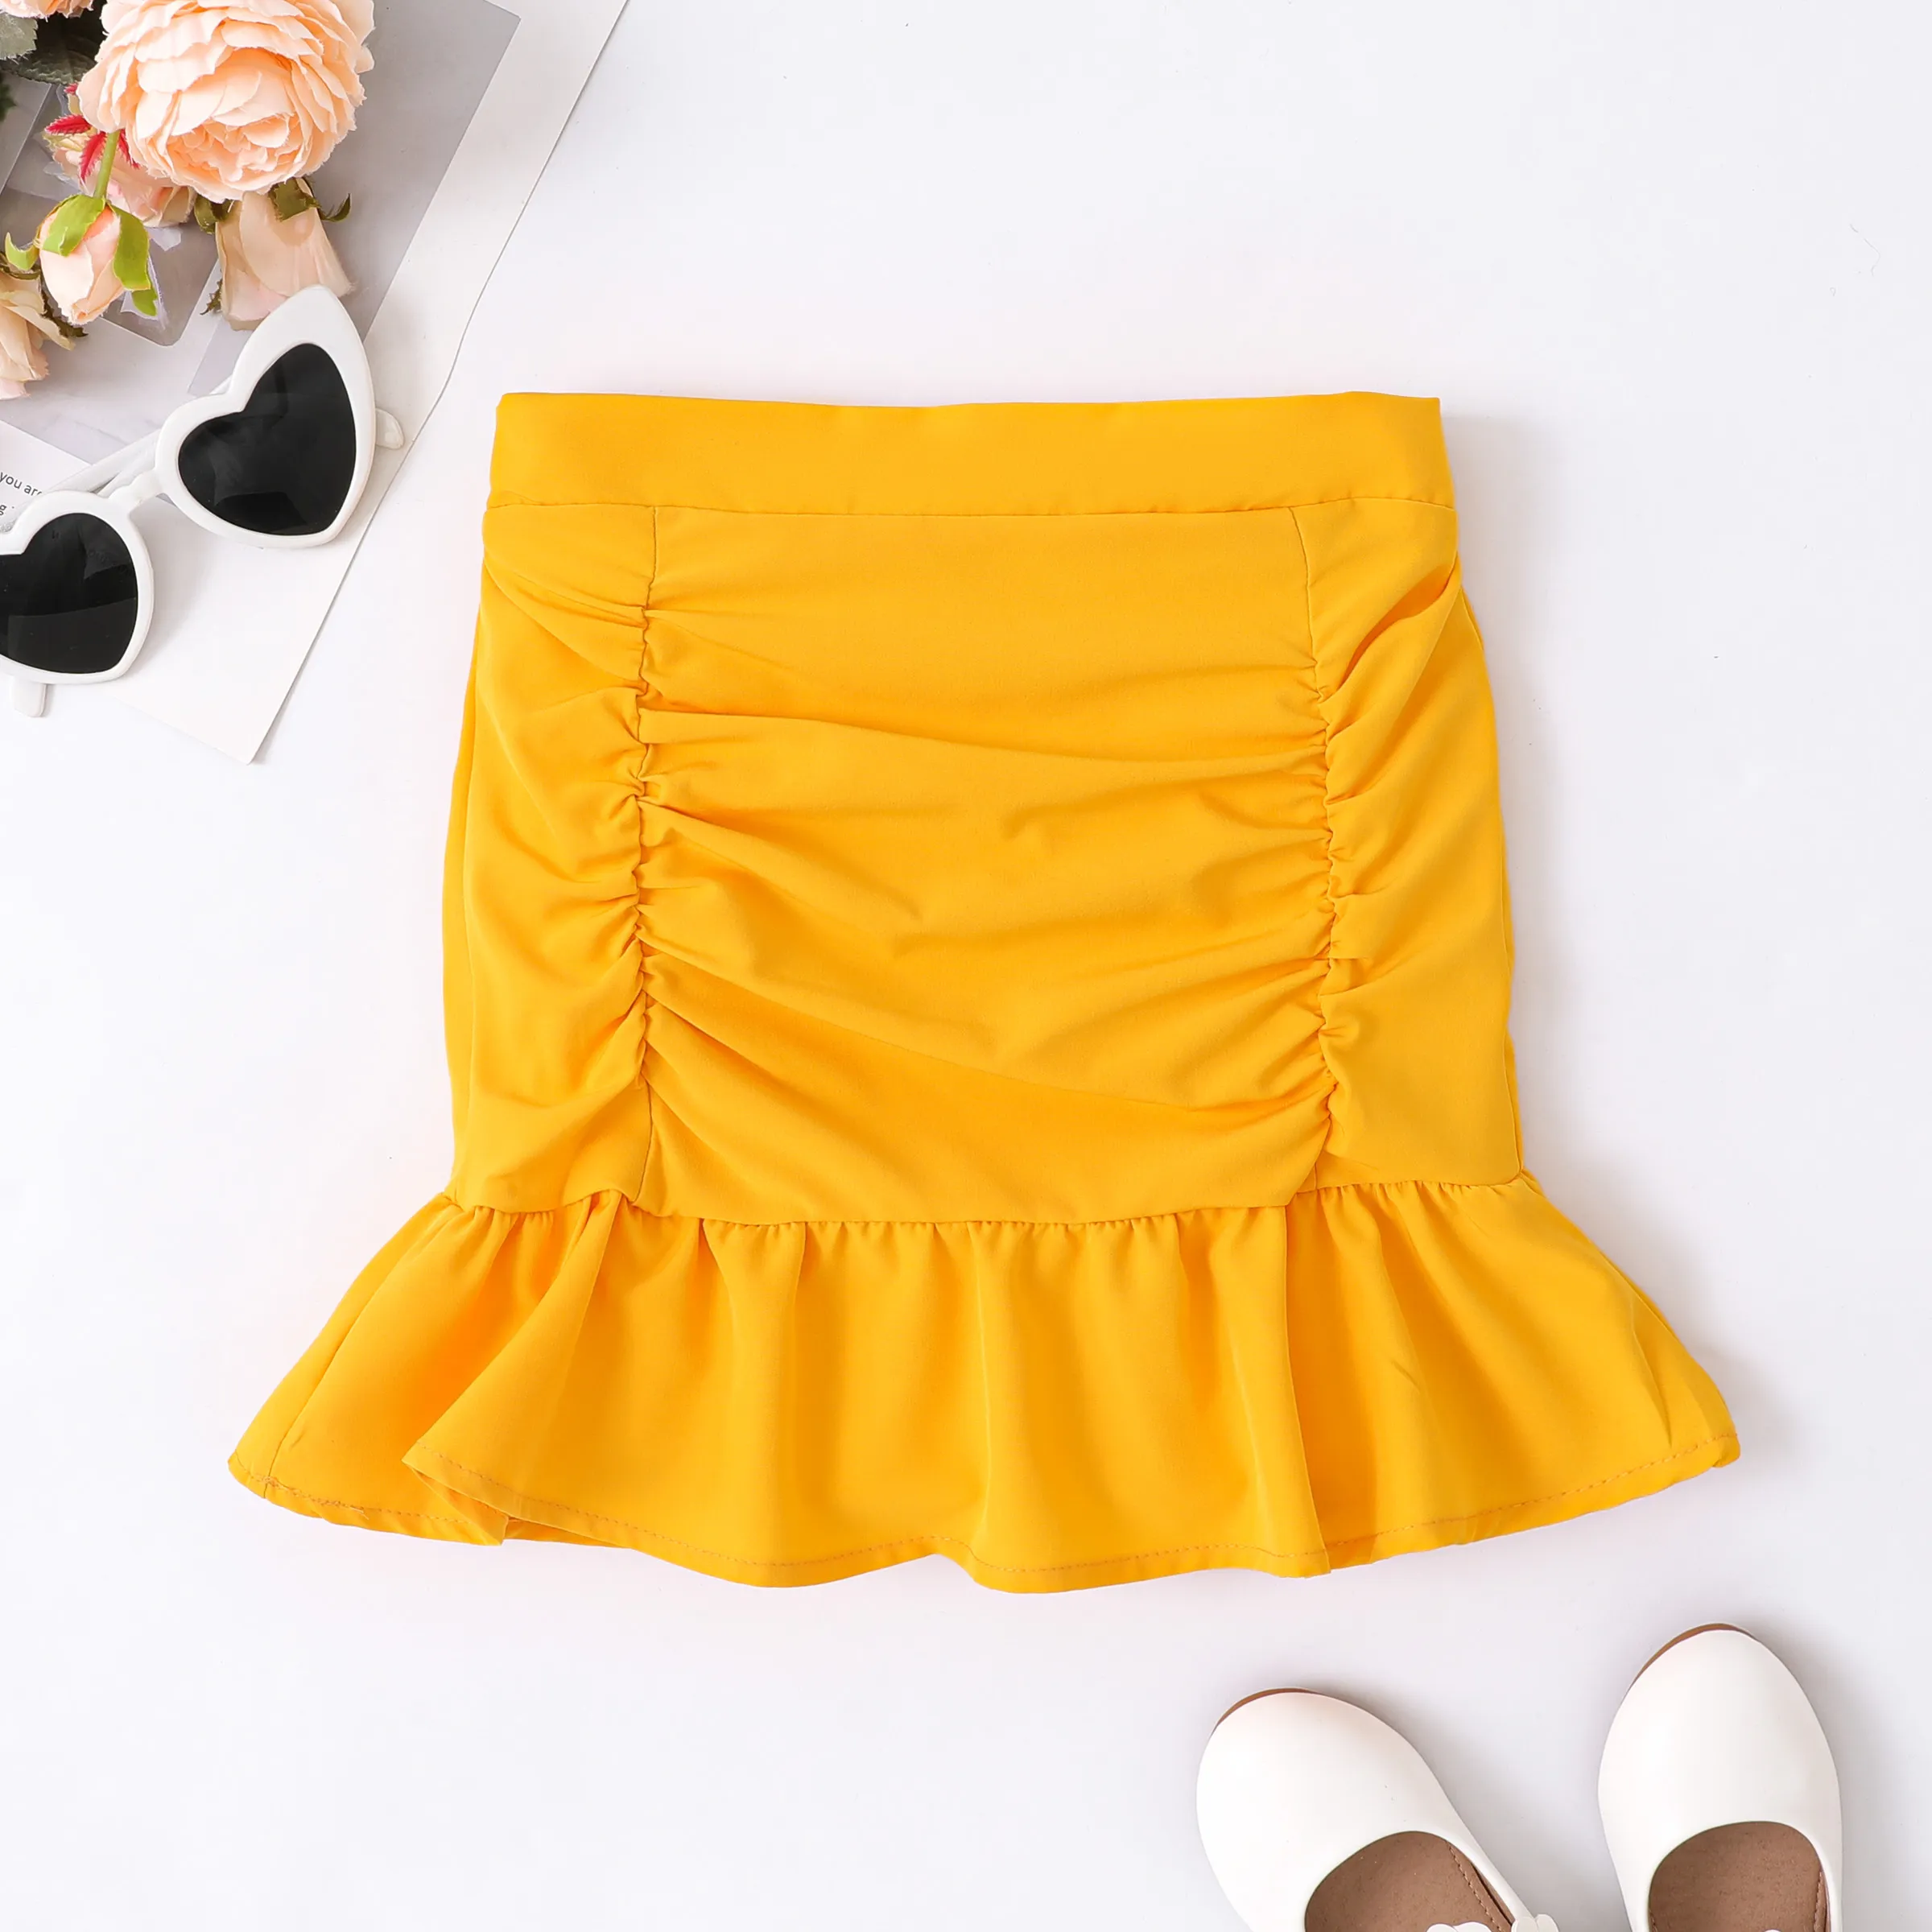 Sweet Ruffle Edge Skirt for Girls - Polyester Spandex Blend - 1 Piece - Regular Fit - Kid's Skirt Cl